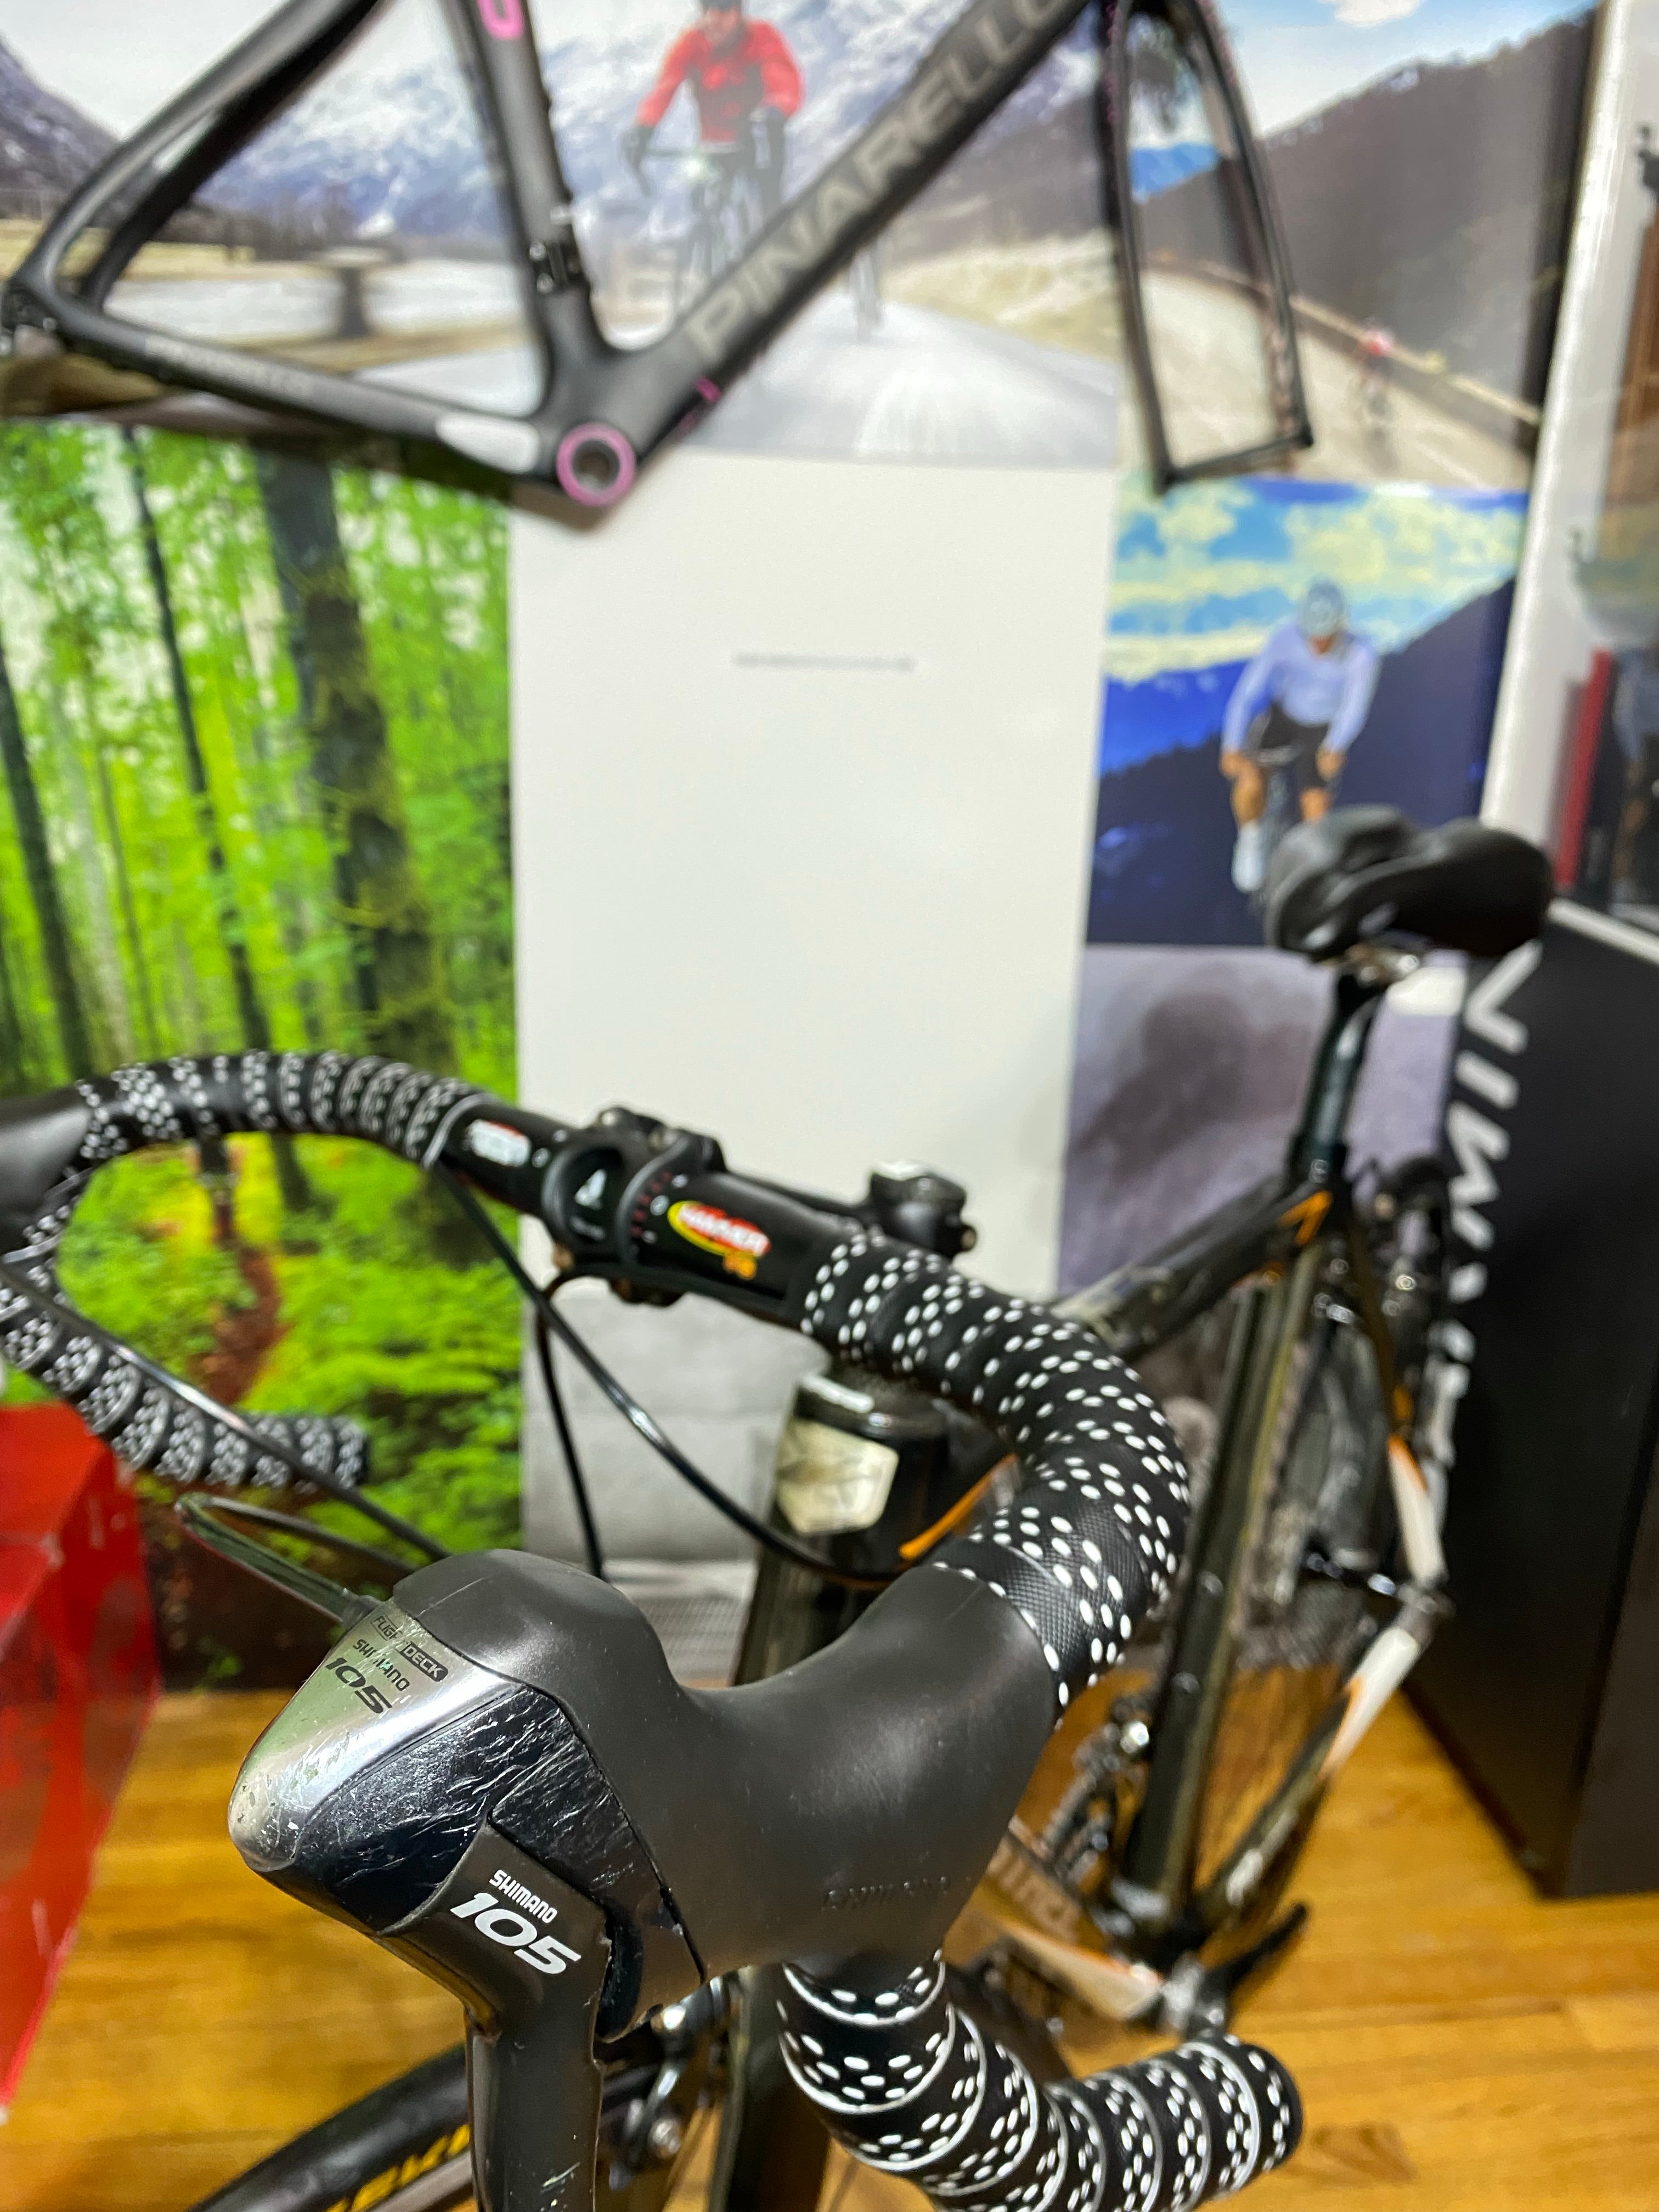 Kestrel Evoke with Full Shimano 105 Carbon Fiber Road Bike